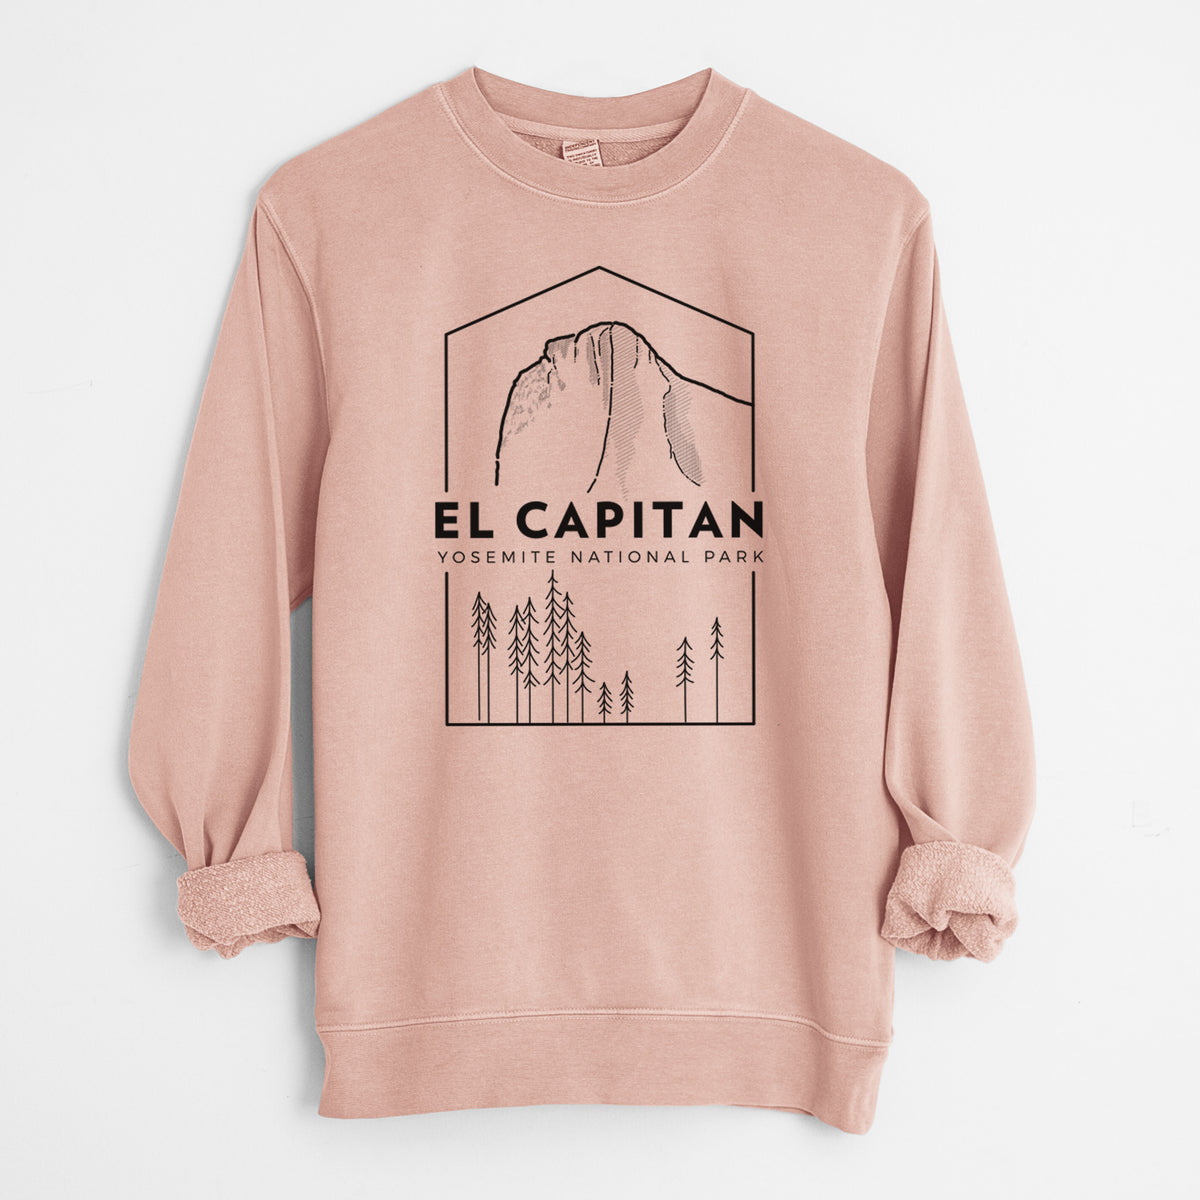 El Capitan - Yosemite National Park - Unisex Pigment Dyed Crew Sweatshirt